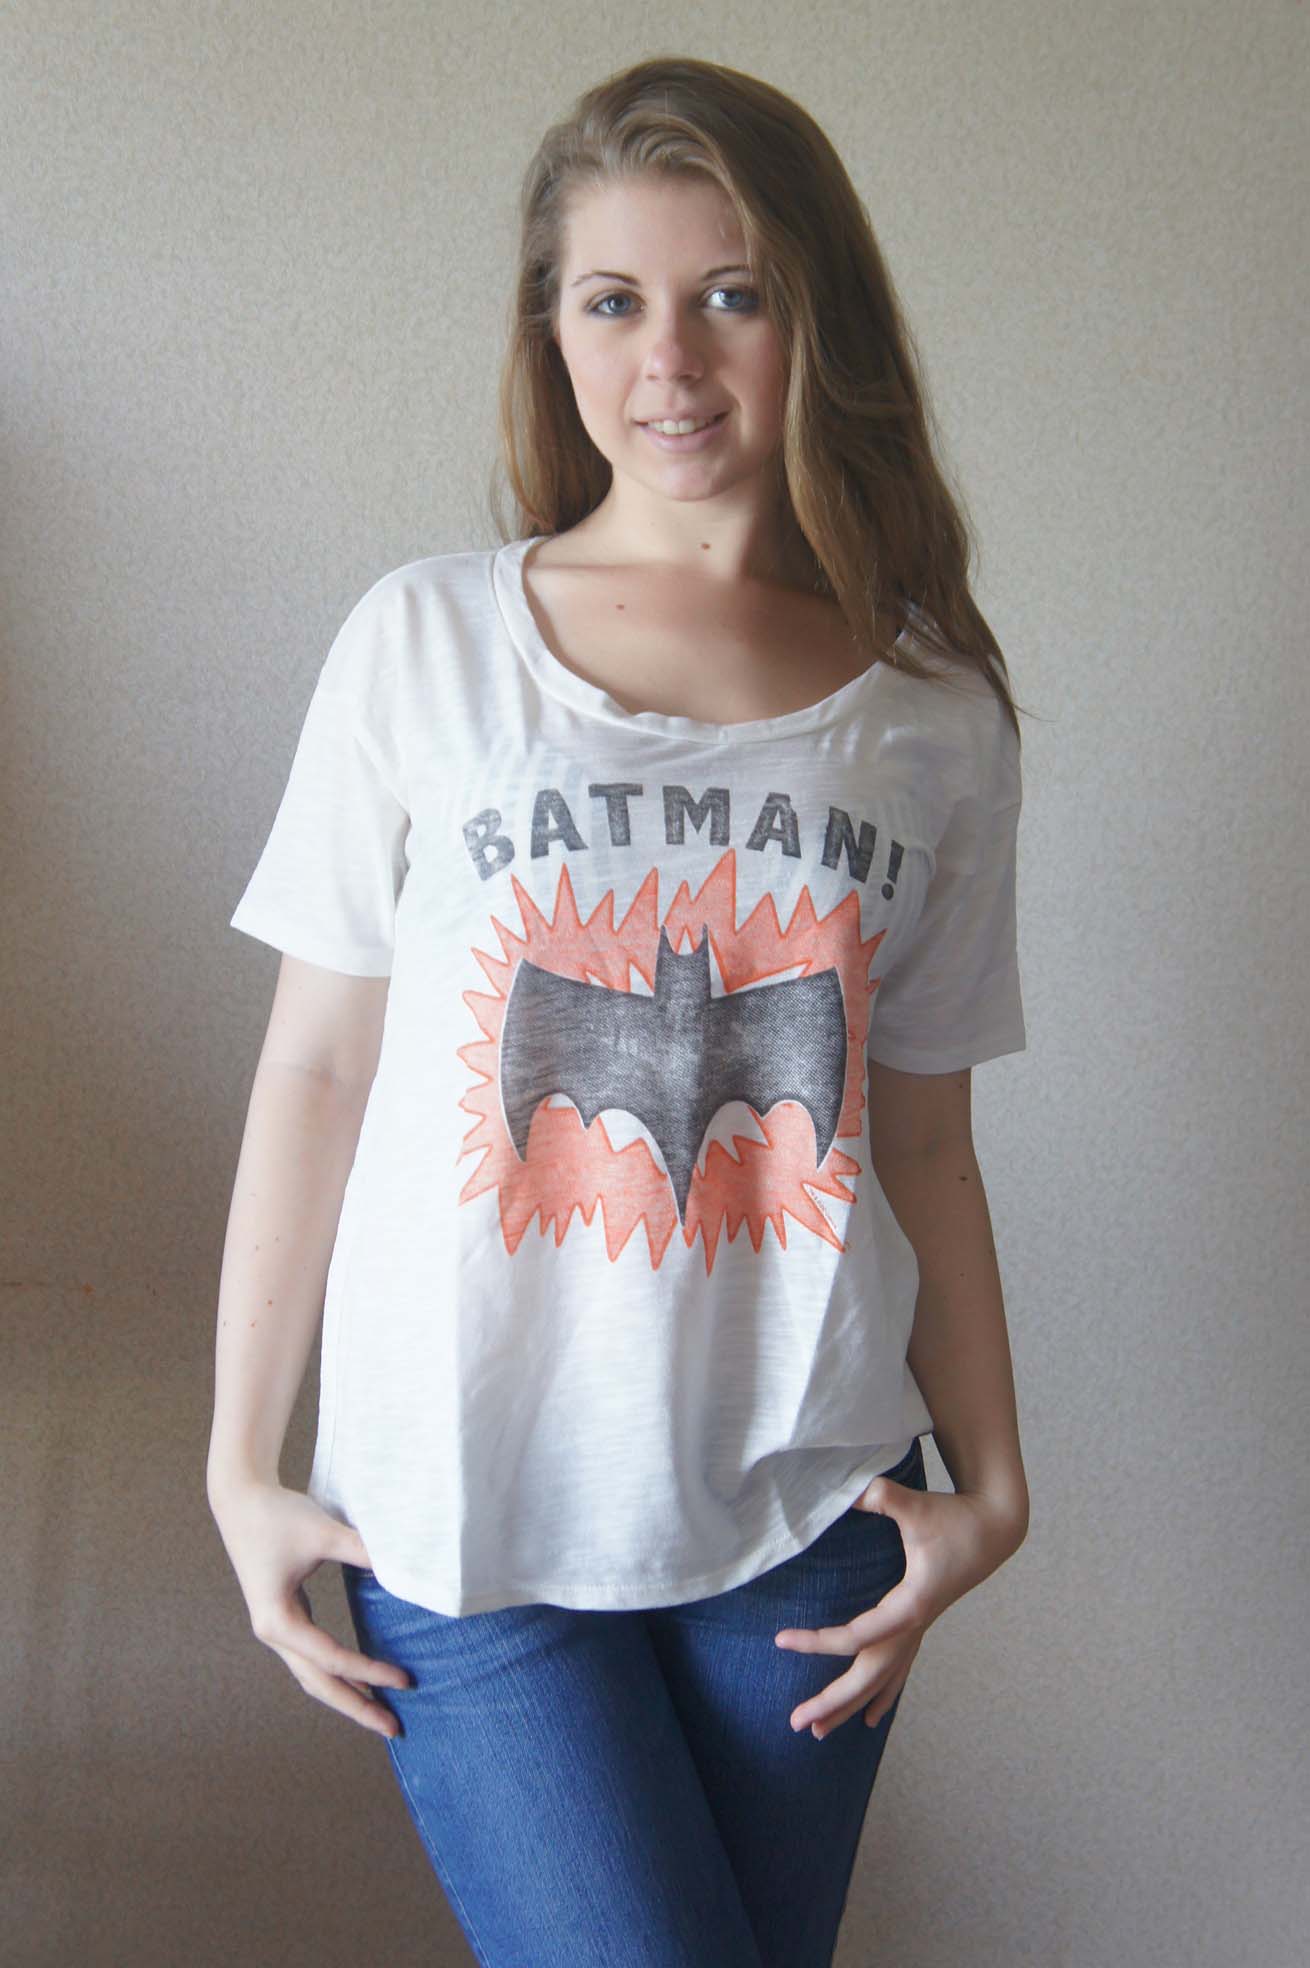 Batman Womens T-Shirt at Sweetnsourtees.com - Batman Photo (31635365 ...